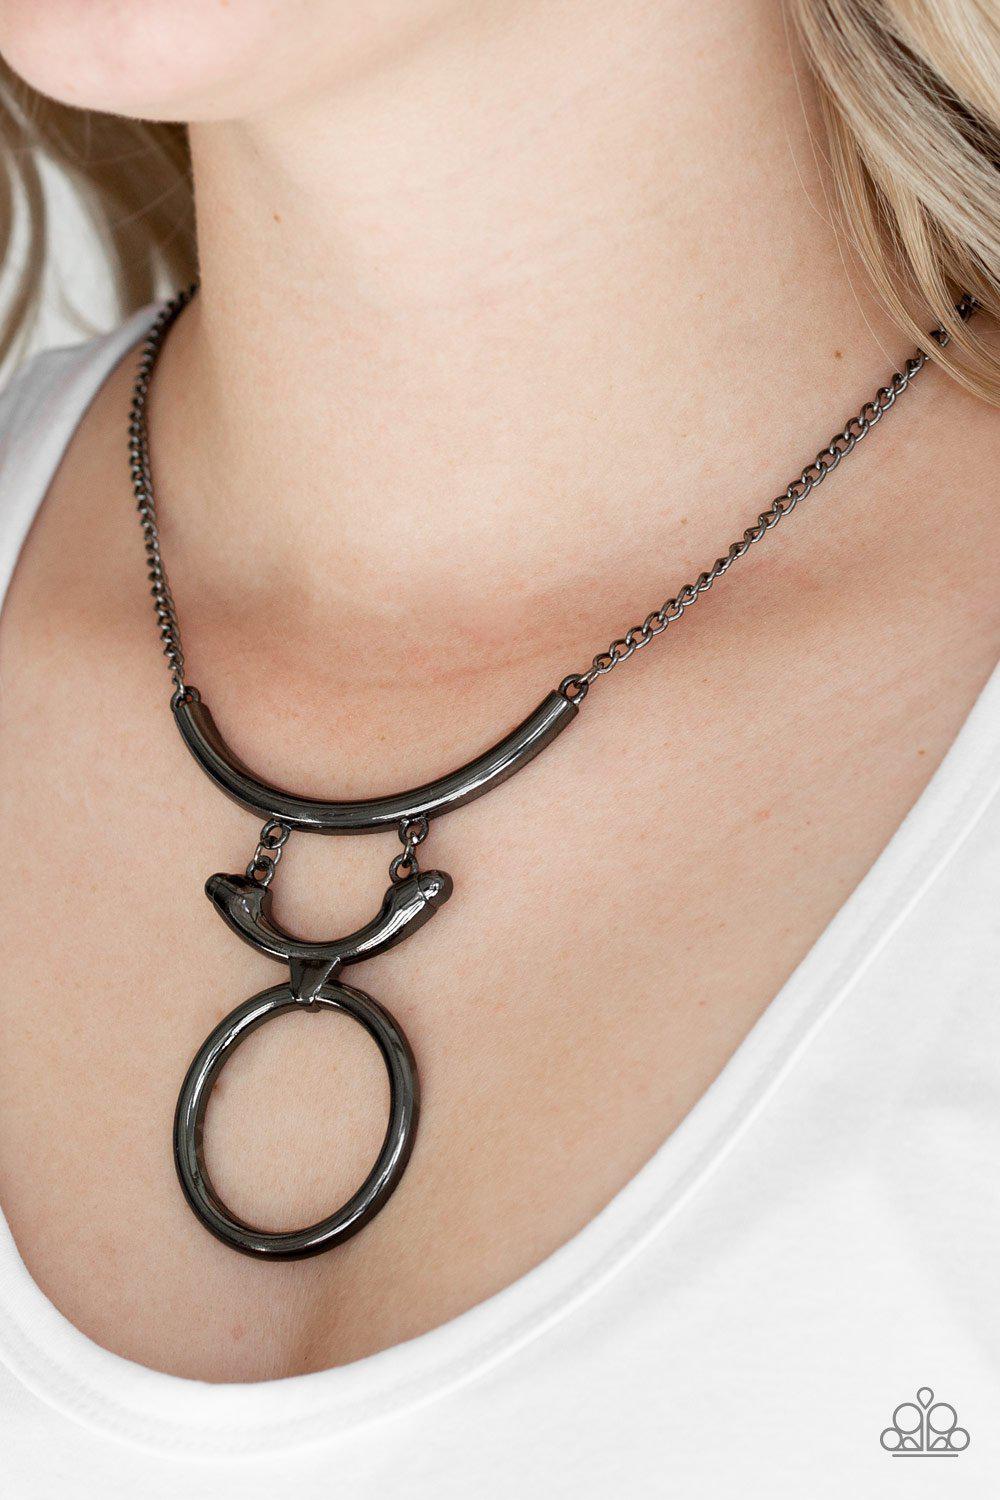 Walk Like An Egyptian Gunmetal Black Necklace - Paparazzi Accessories - model -CarasShop.com - $5 Jewelry by Cara Jewels